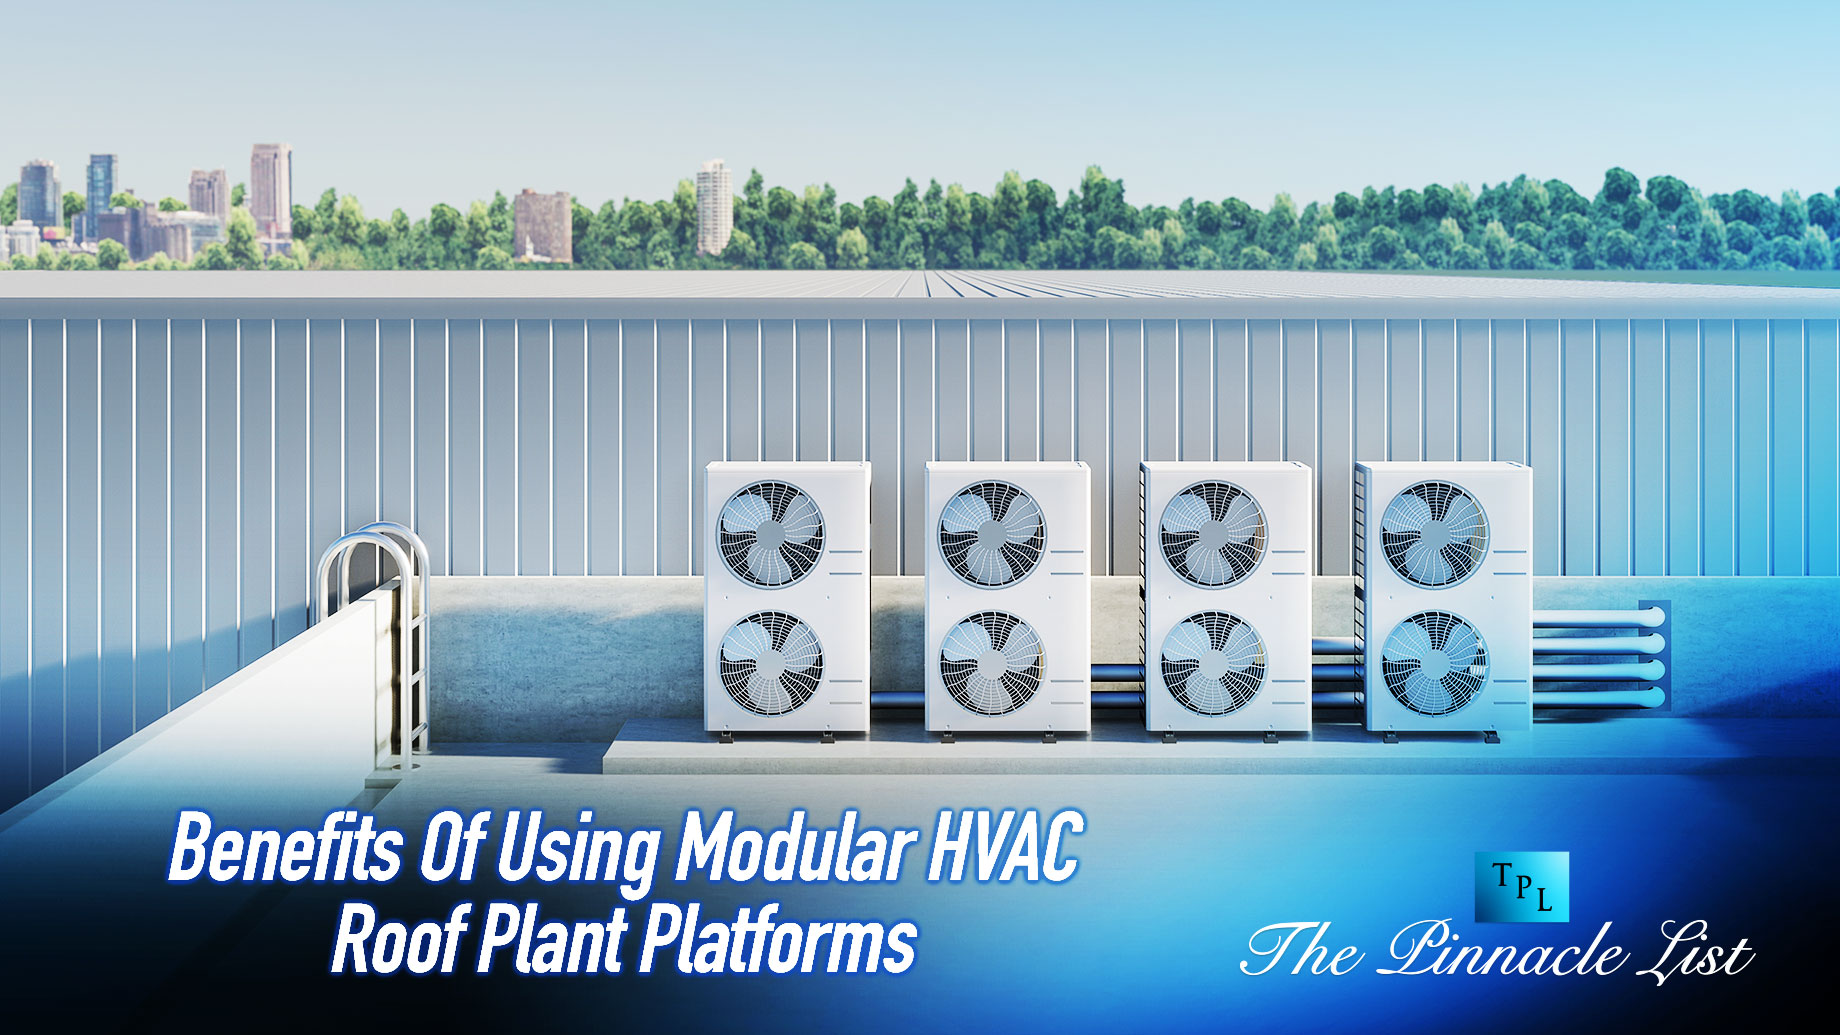 Benefits Of Using Modular HVAC Roof Plant Platforms